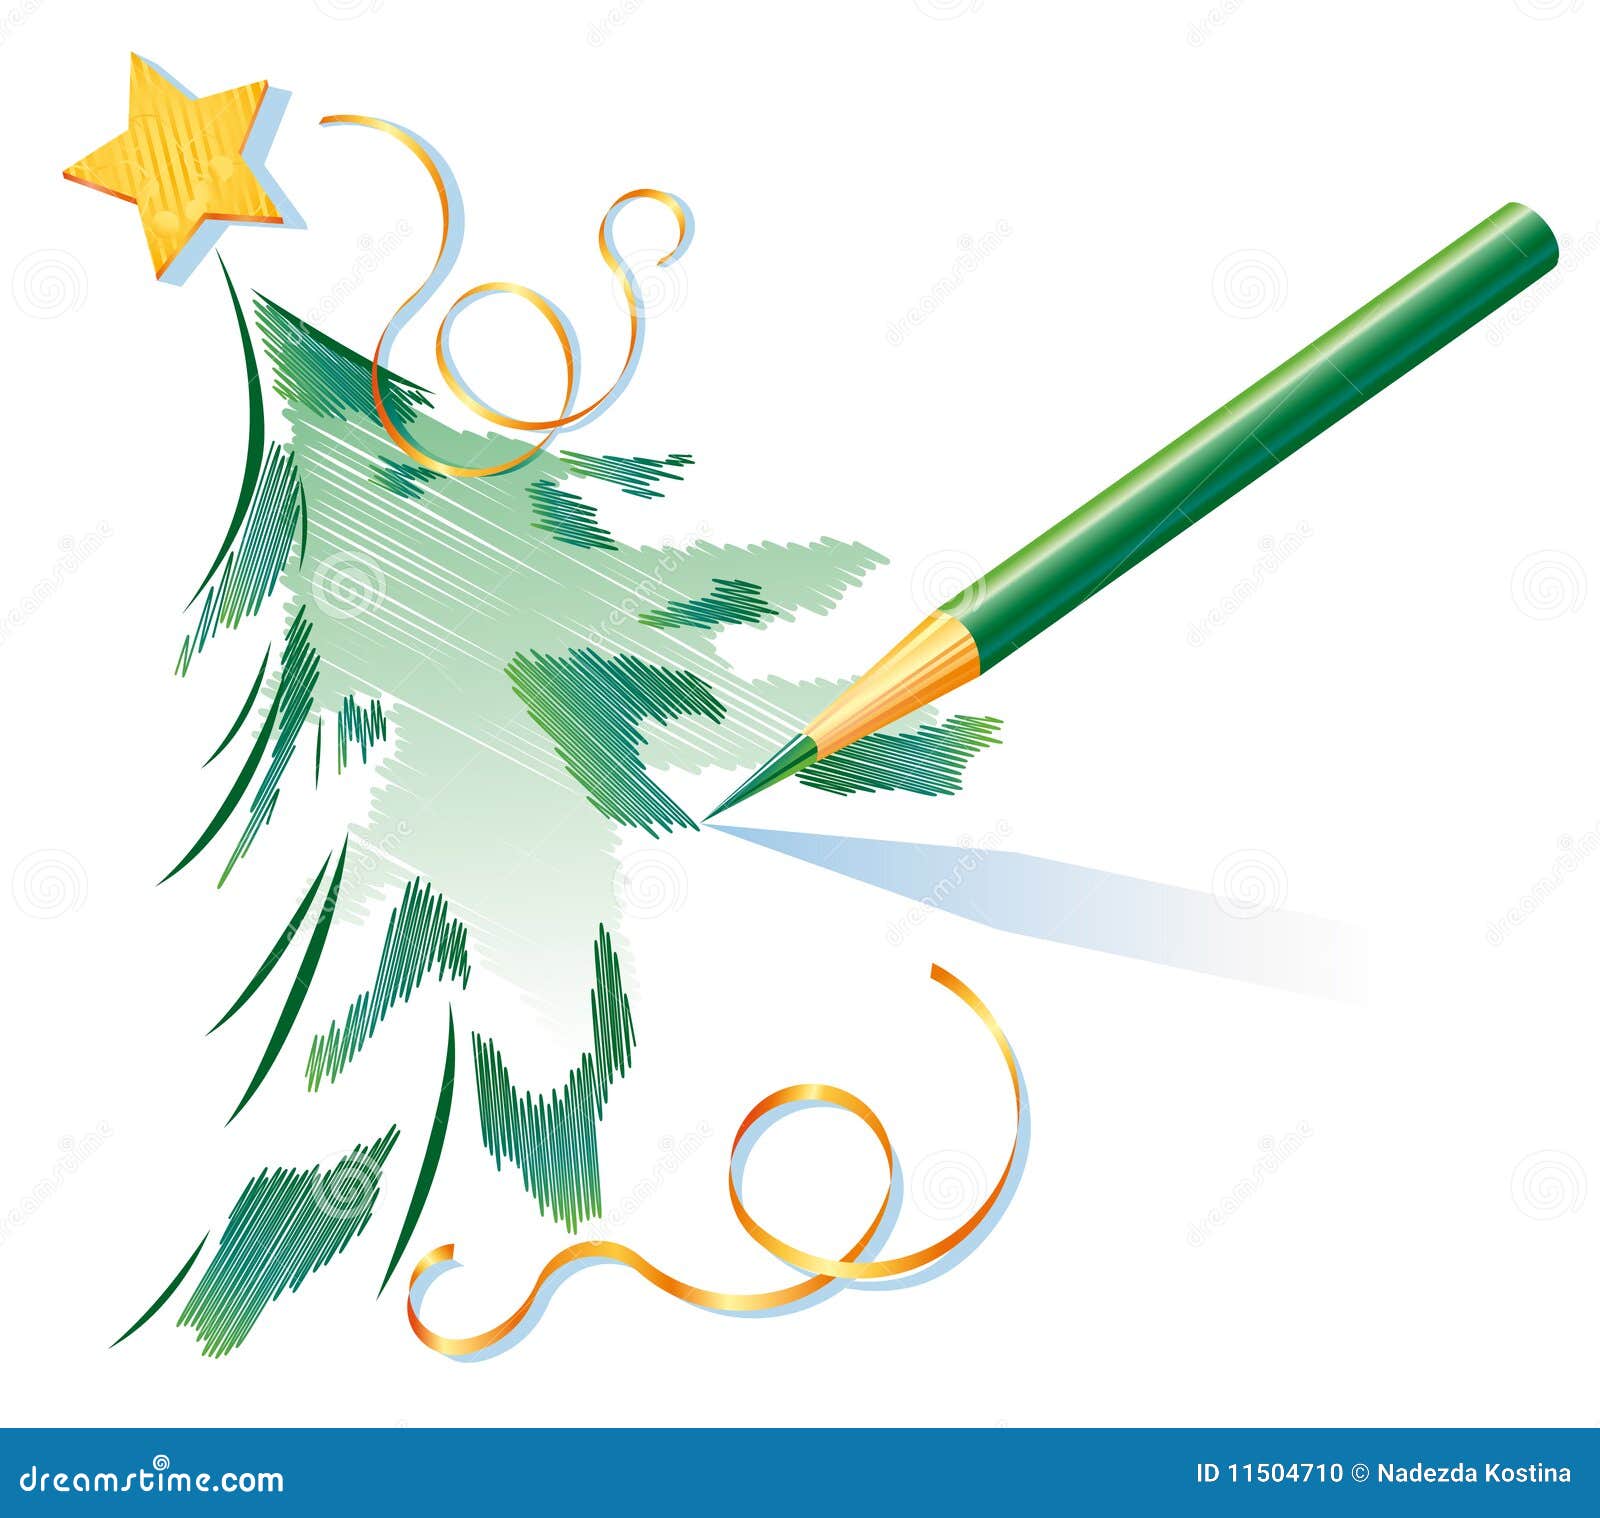 Amazing Pencil Amazing Realistic Christmas Drawings - Photoshop pencil ...